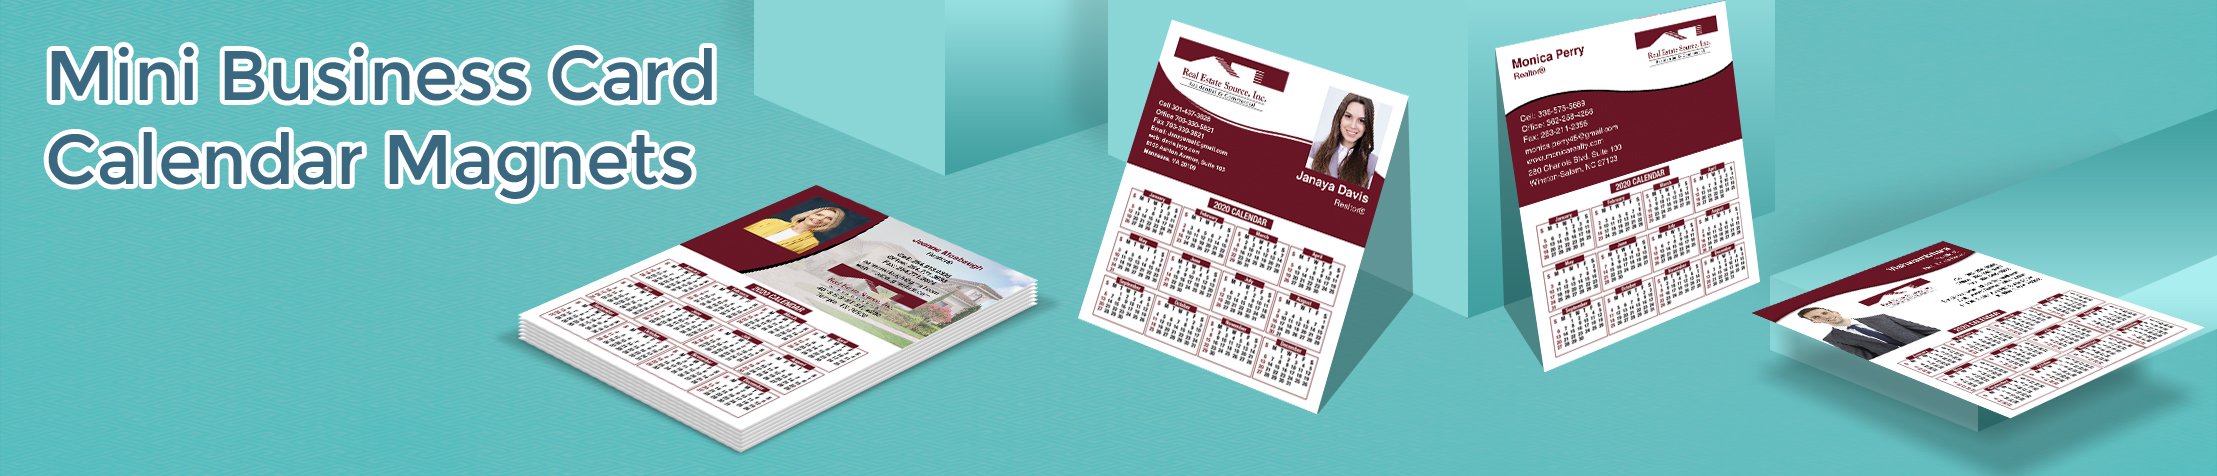 Real Estate Source Real Estate Mini Business Card Calendar Magnets - Real Estate Source personalized marketing materials | BestPrintBuy.com